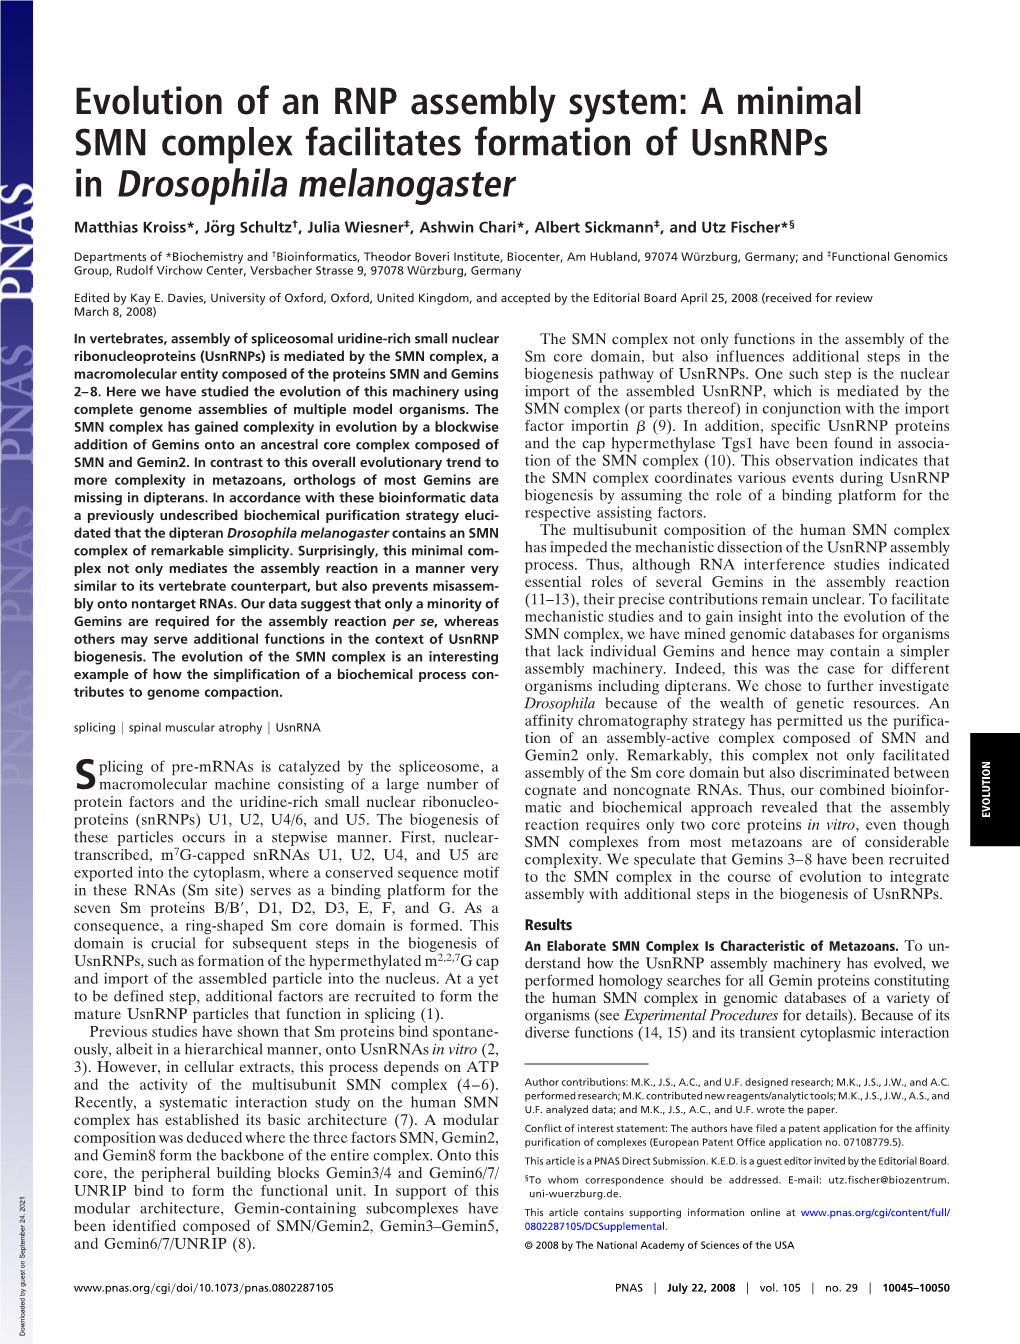 A Minimal SMN Complex Facilitates Formation of Usnrnps in Drosophila Melanogaster